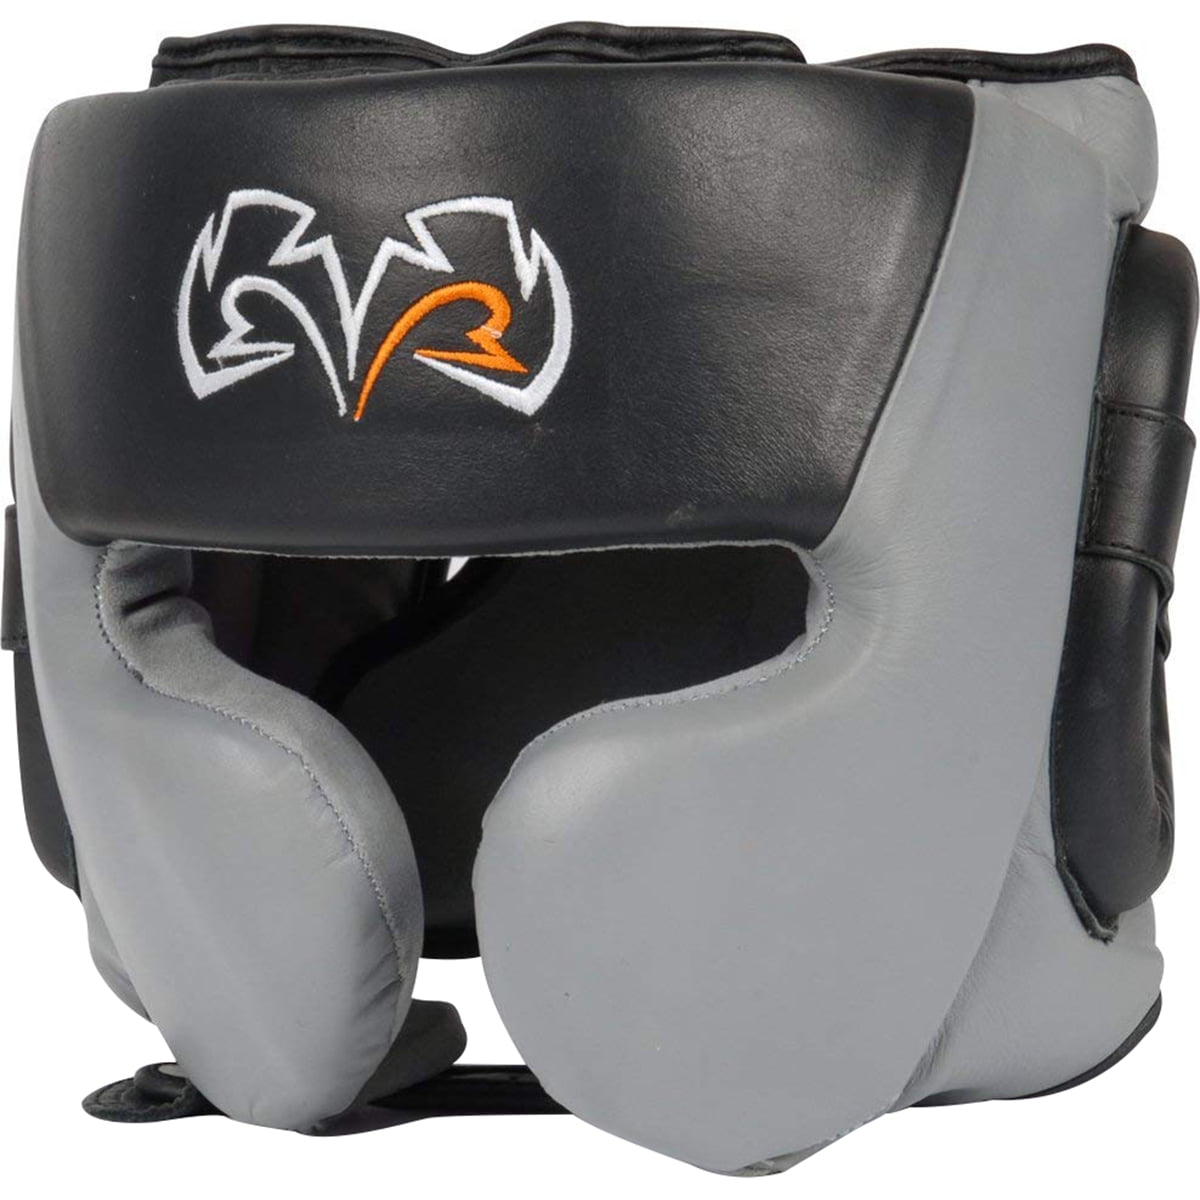 RIVAL Boxing RHG30 Mexican Style Cheek Protector Training Headgear Black/Blue